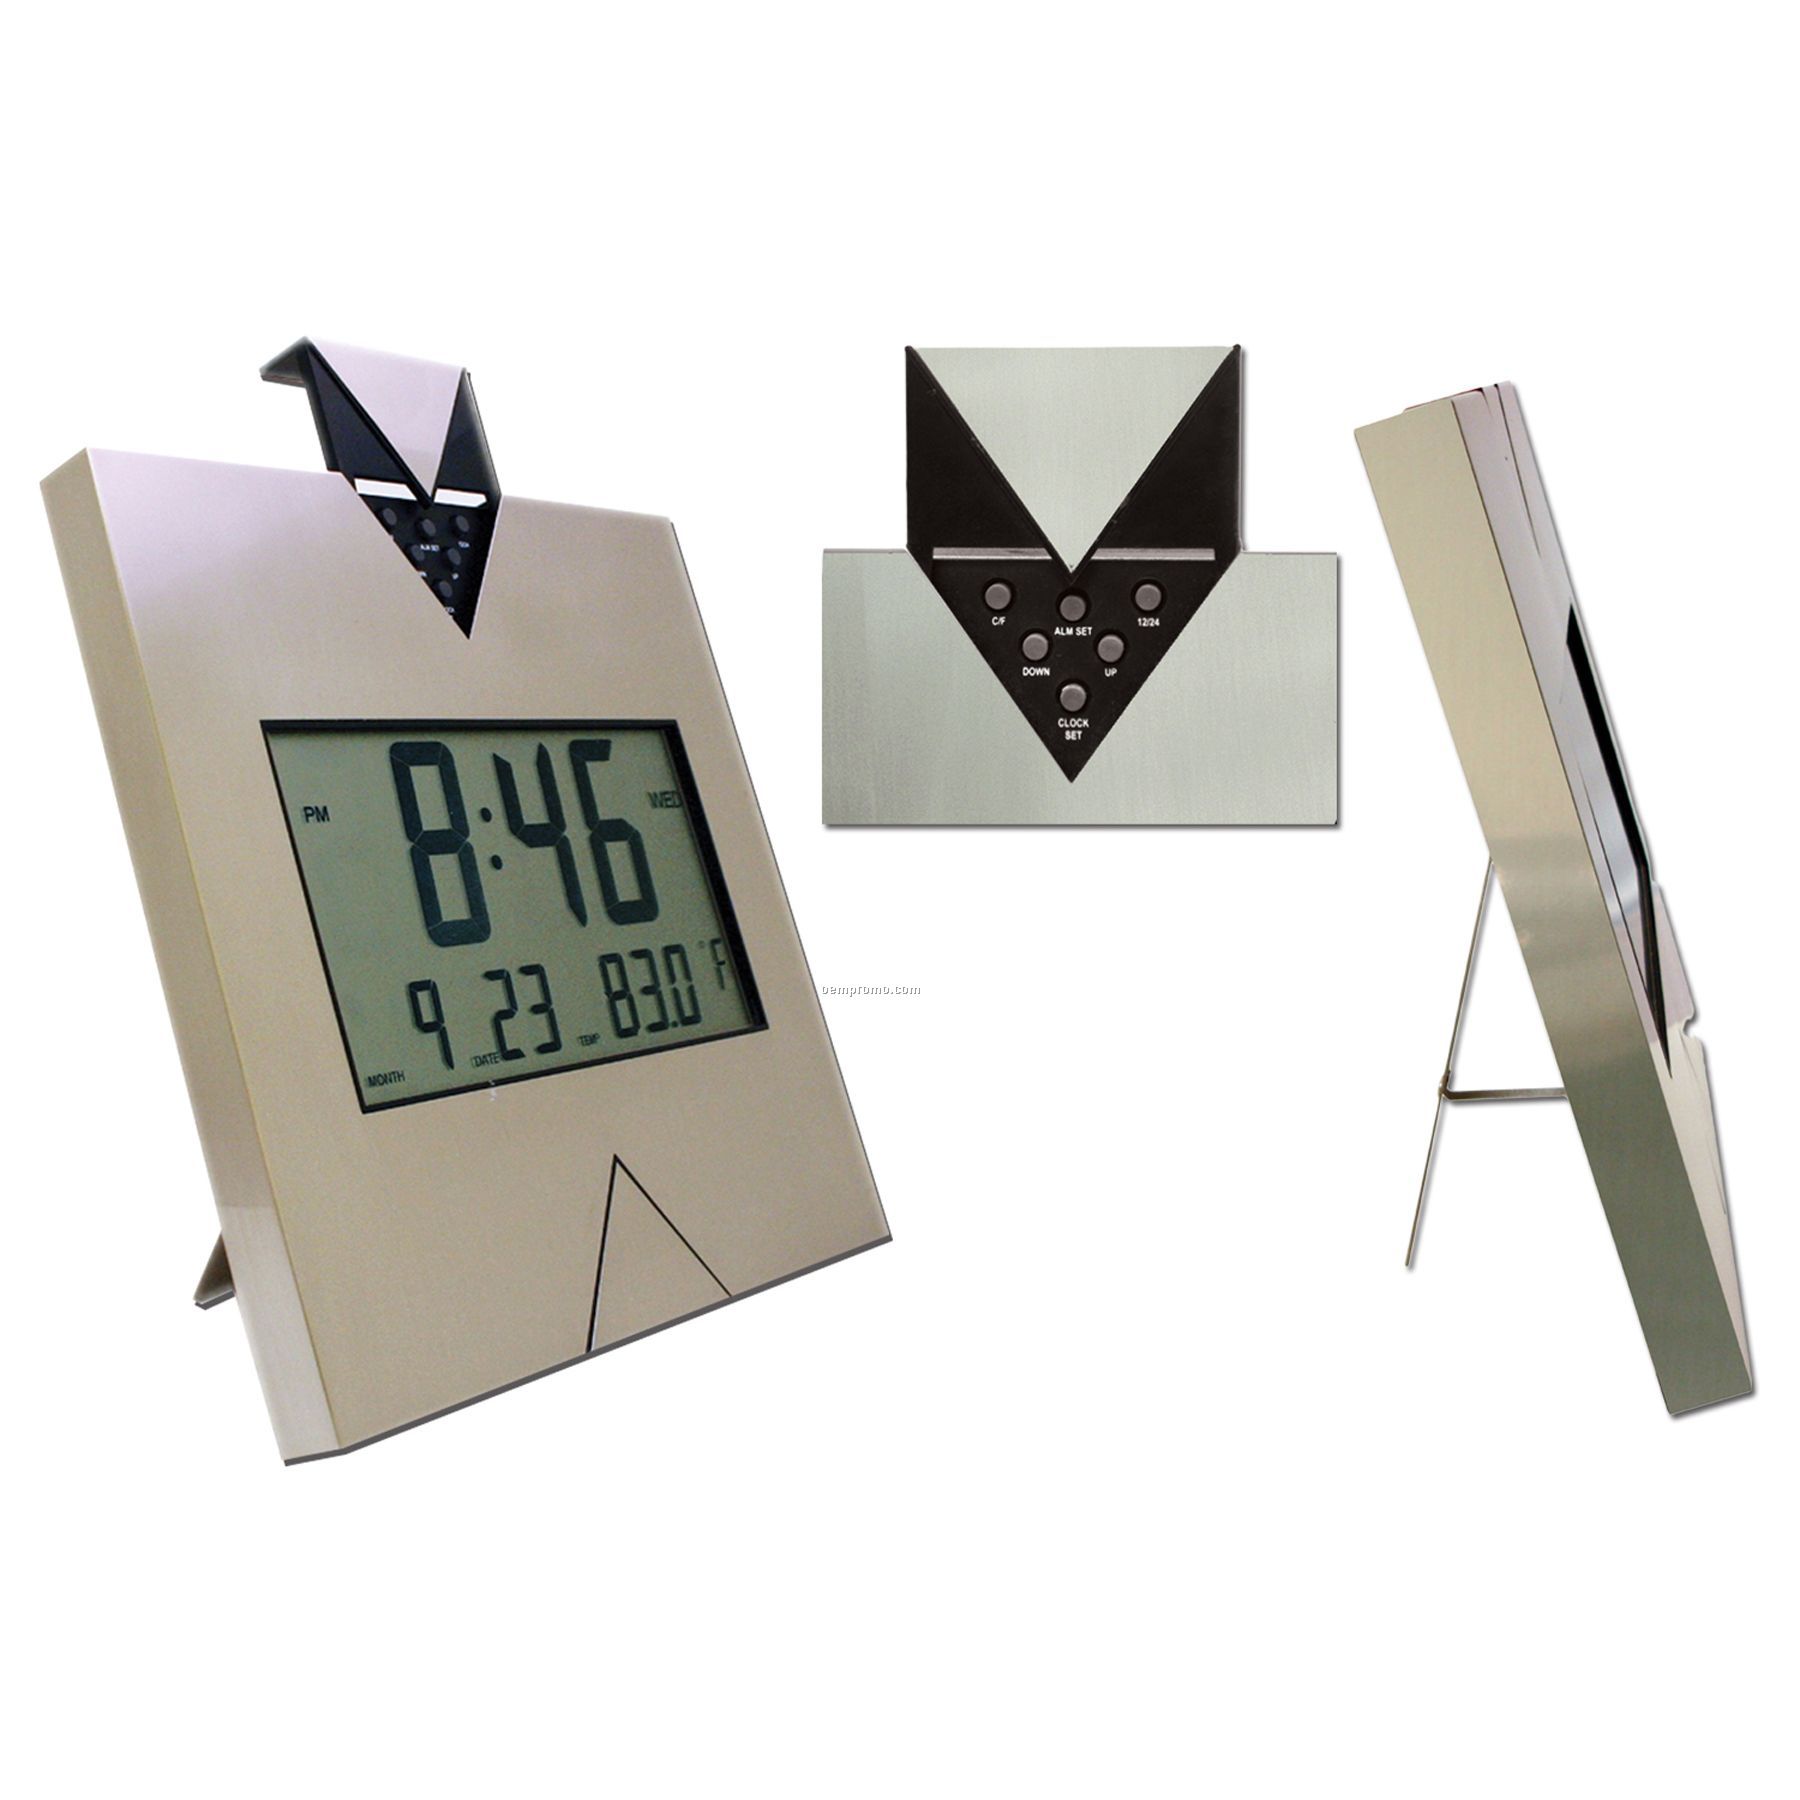 Stainless Steel Digital Alarm Clock W/ Calendar & Large Display